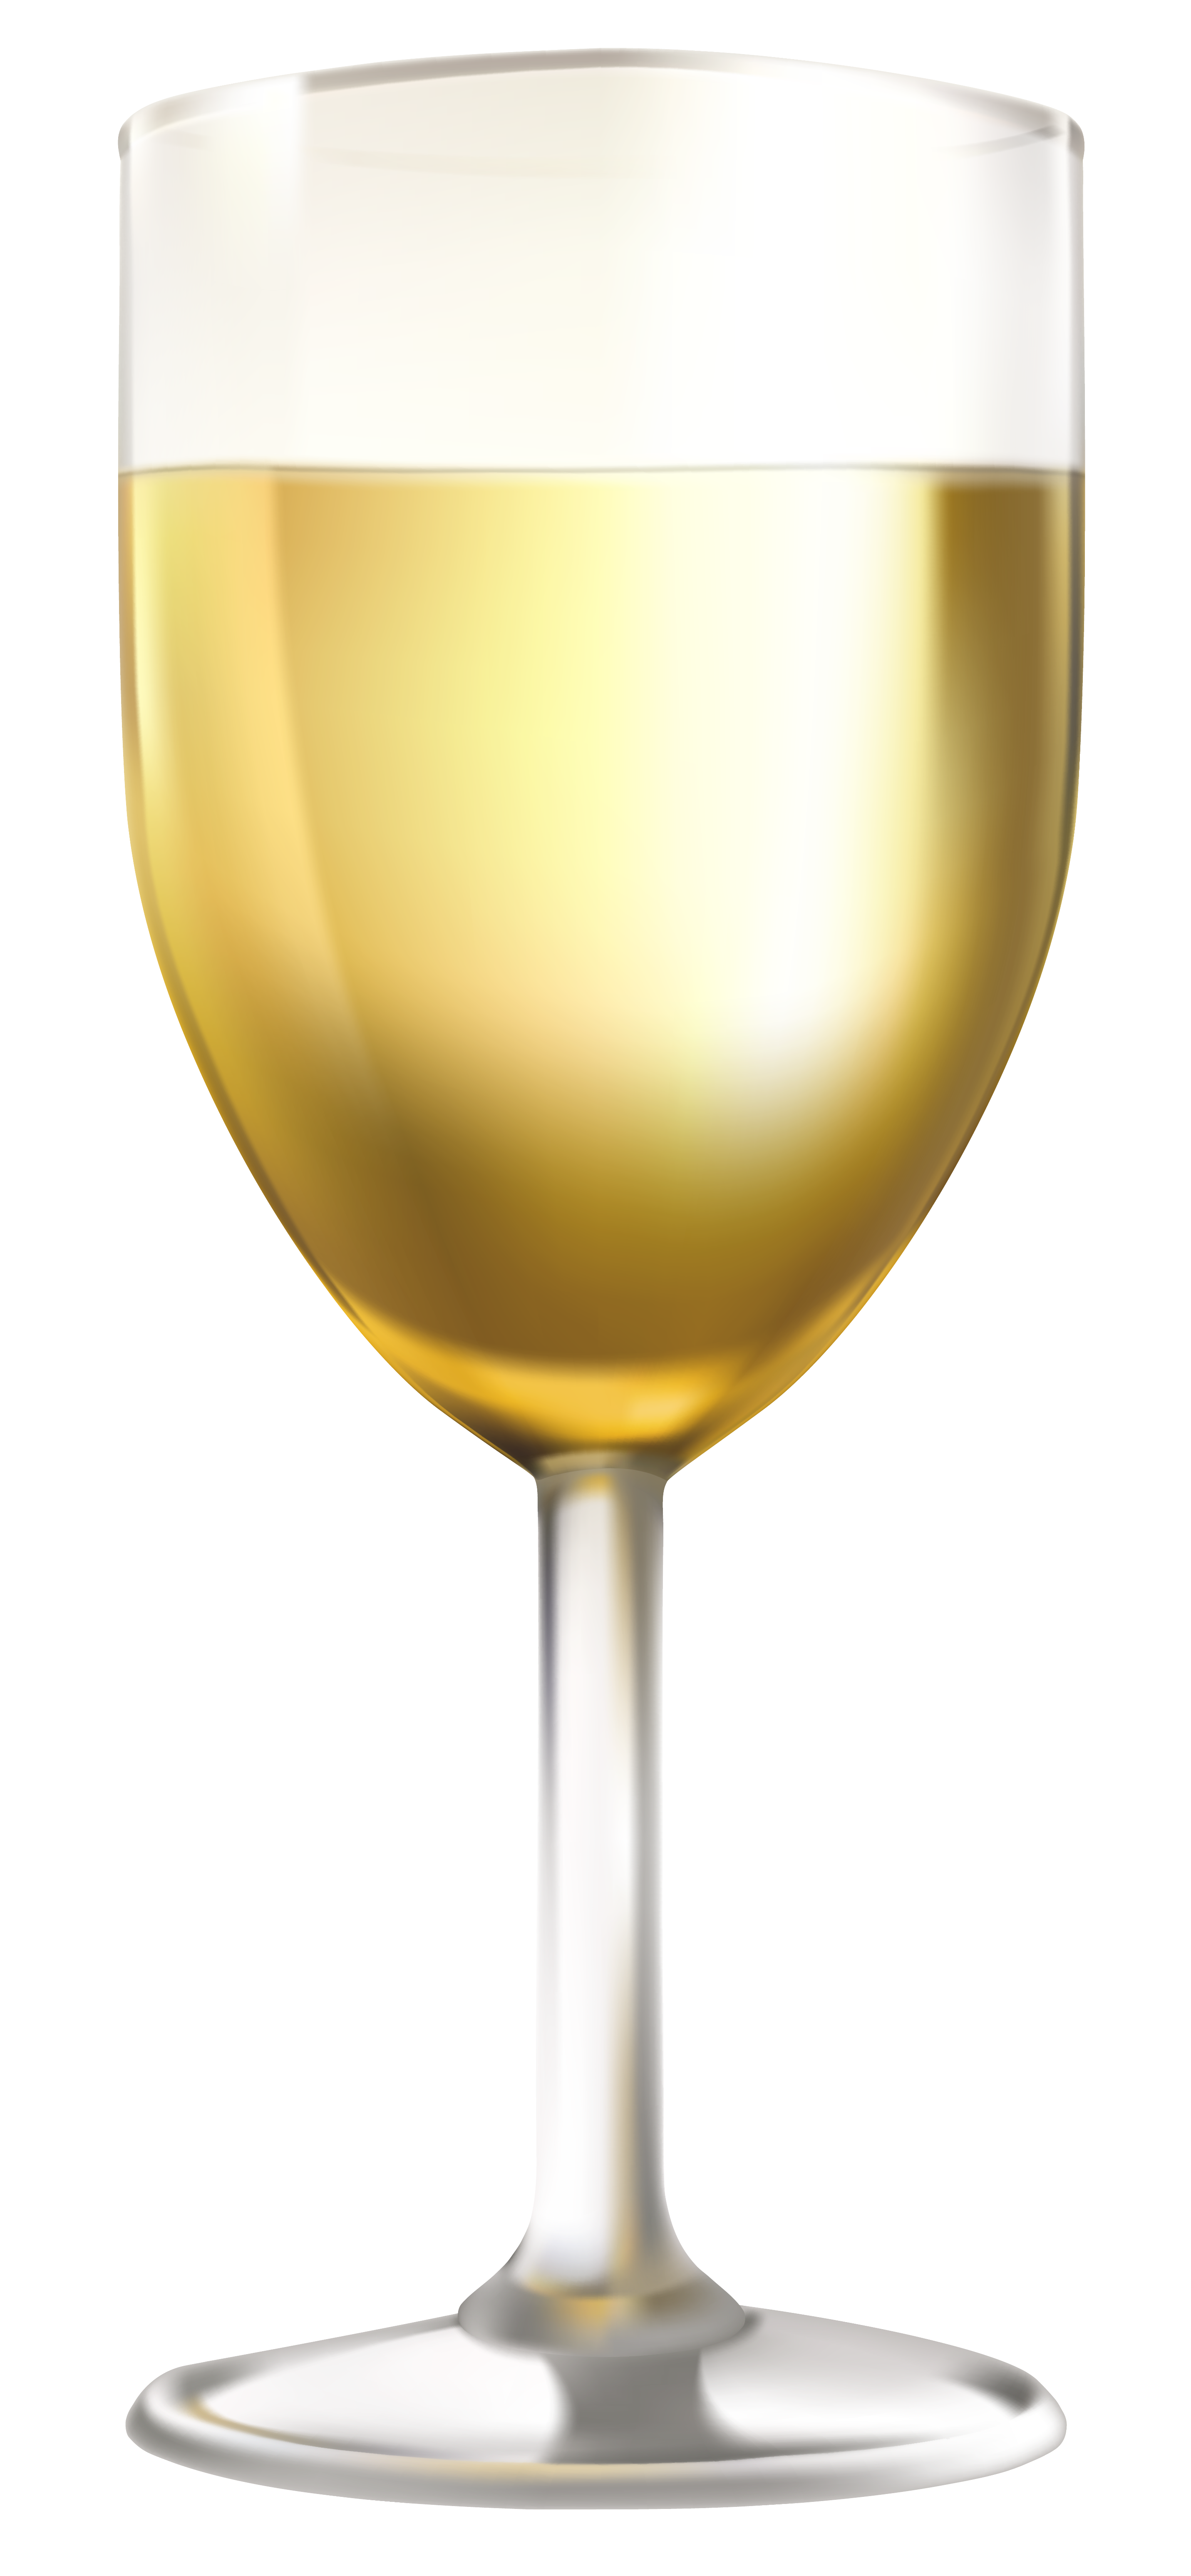 wine glass clip art free download - photo #47